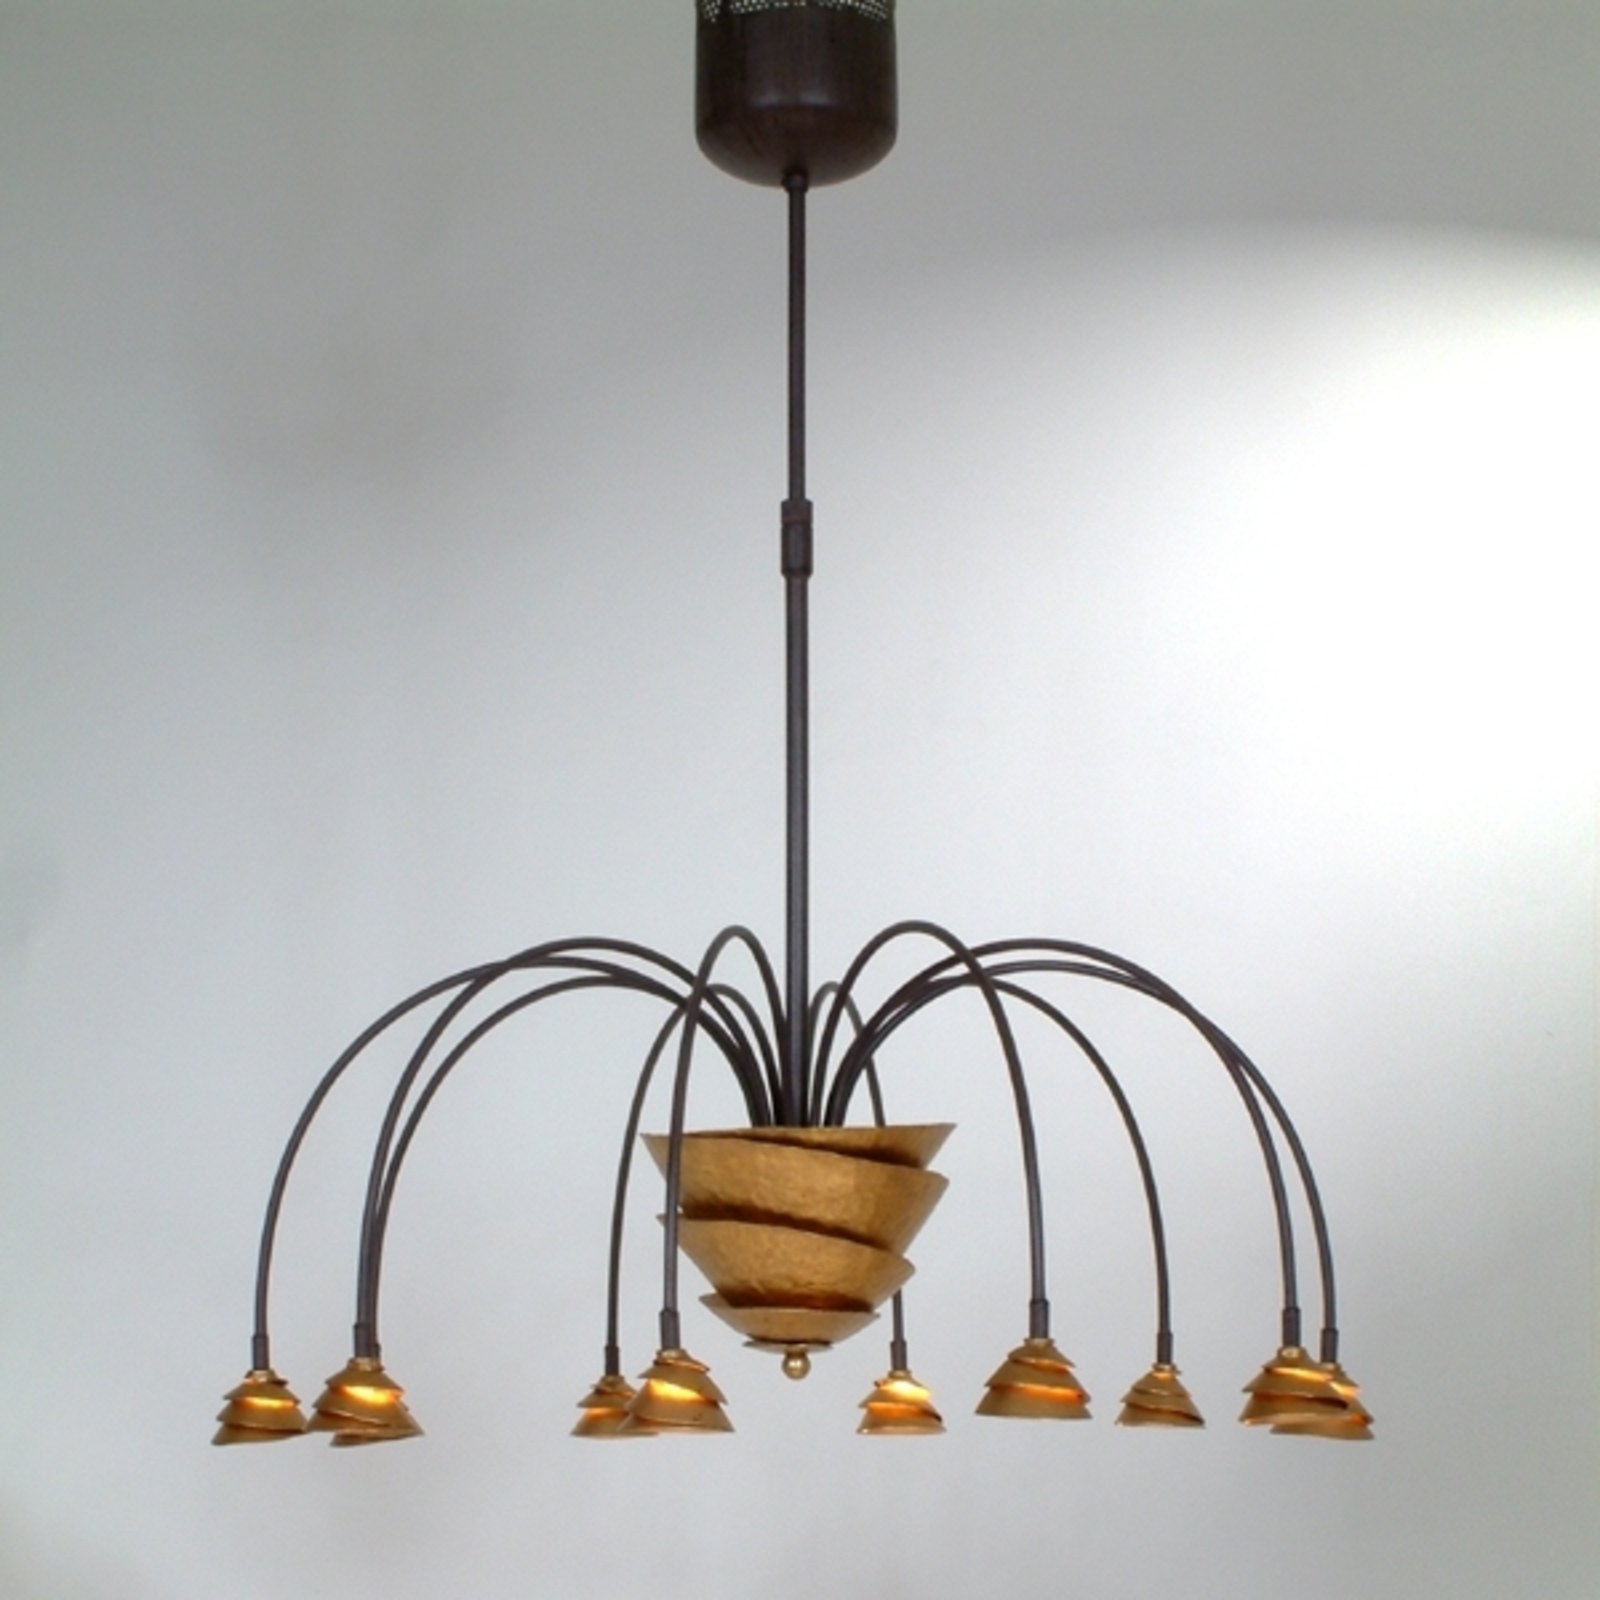 Exclusieve LED hanglamp Fontaine ijzer-bruin-goud